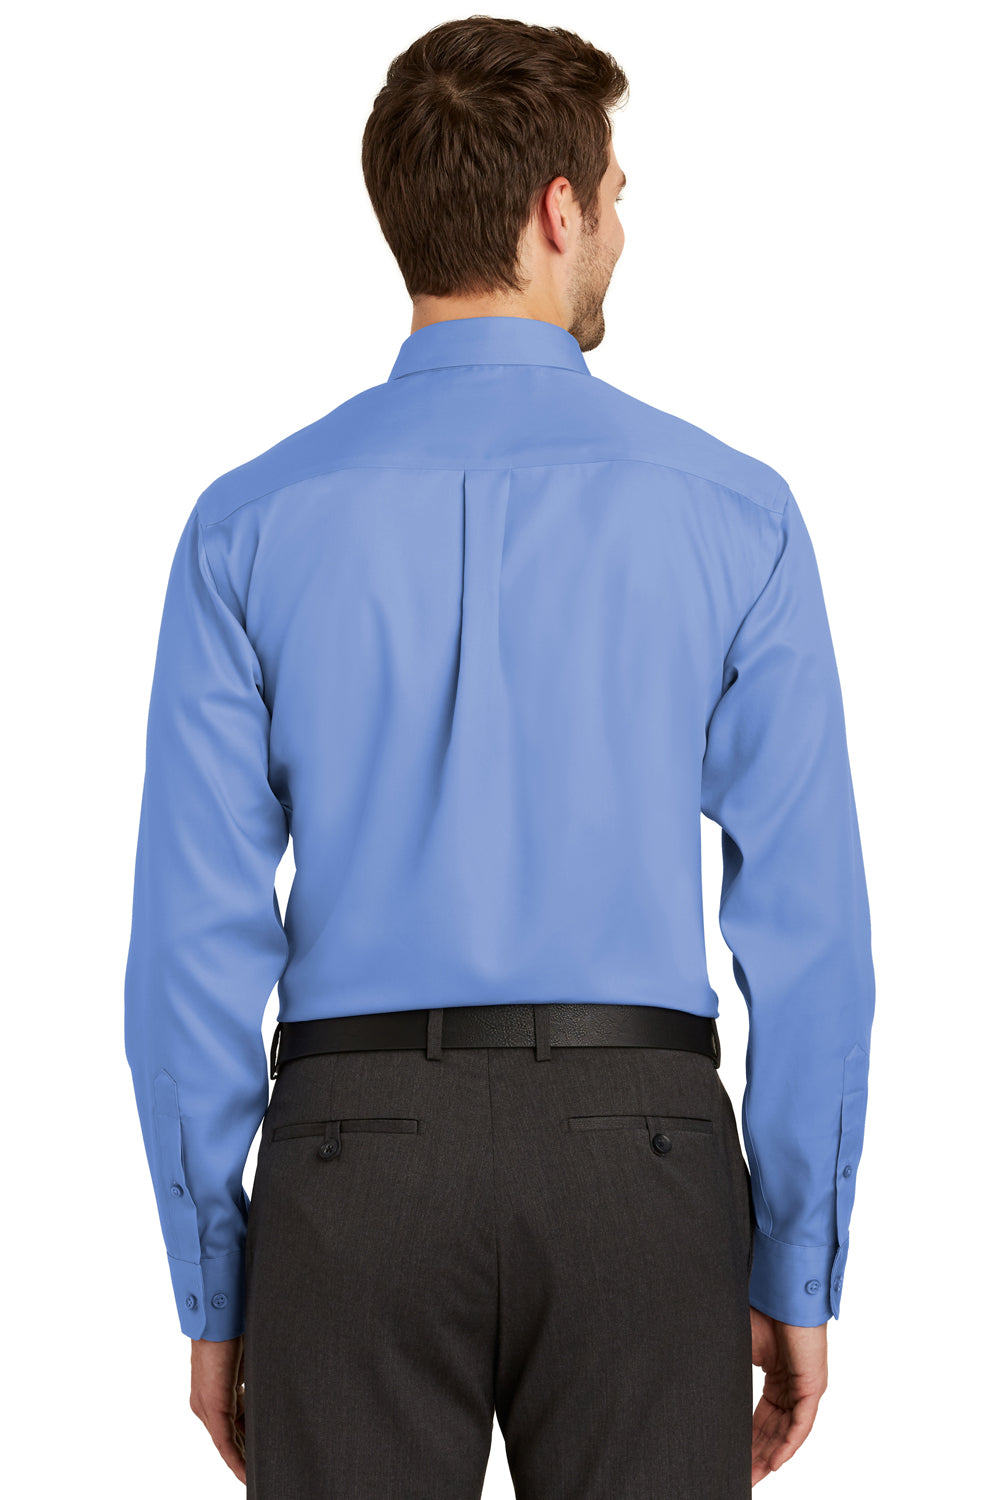 Port Authority S638 Mens Wrinkle Resistant Long Sleeve Button Down Shirt w/ Pocket Ultramarine Blue Back